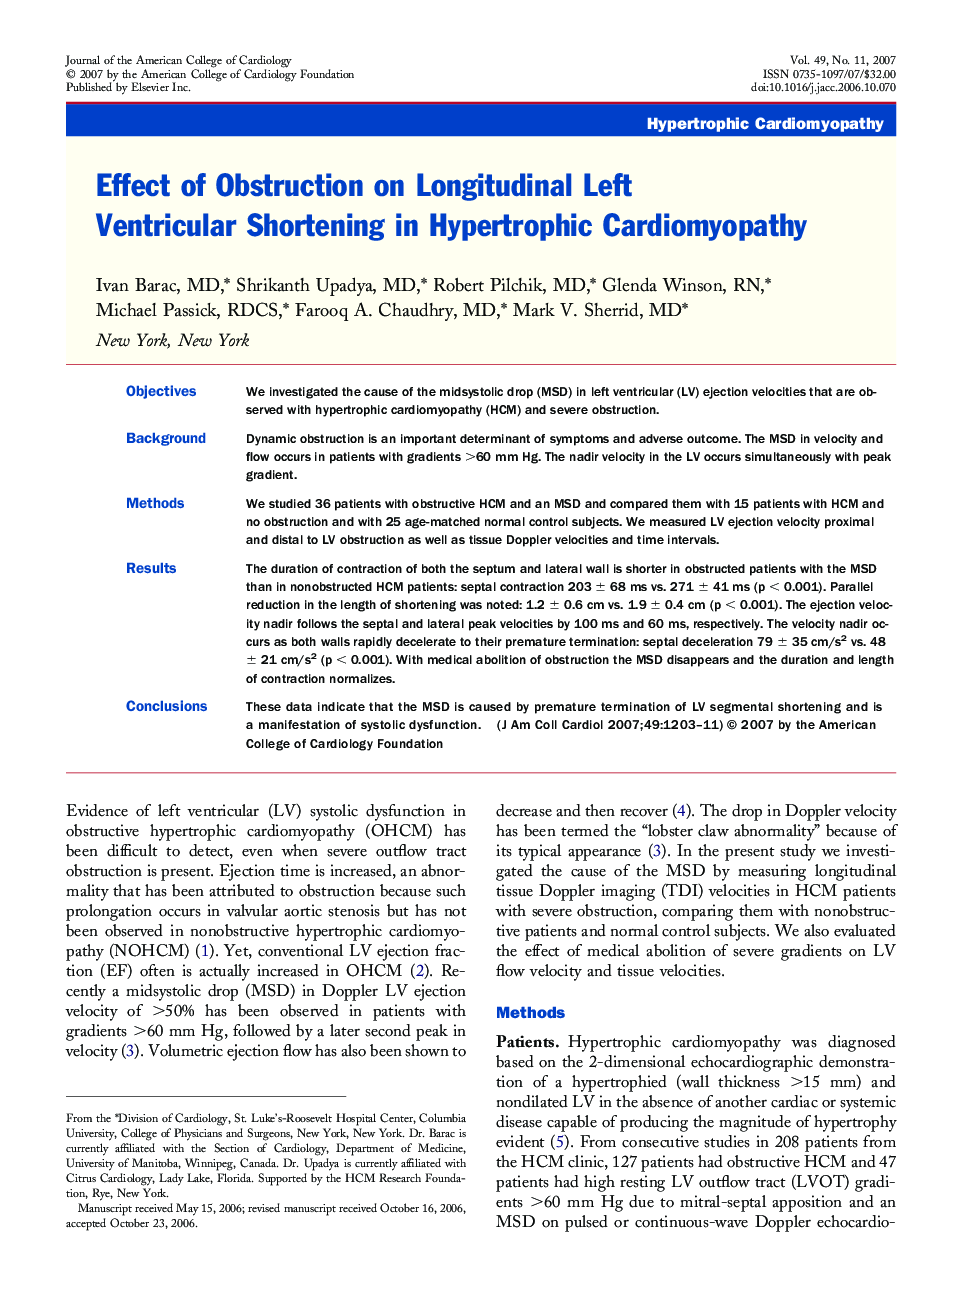 Effect of Obstruction on Longitudinal Left Ventricular Shortening in Hypertrophic Cardiomyopathy 